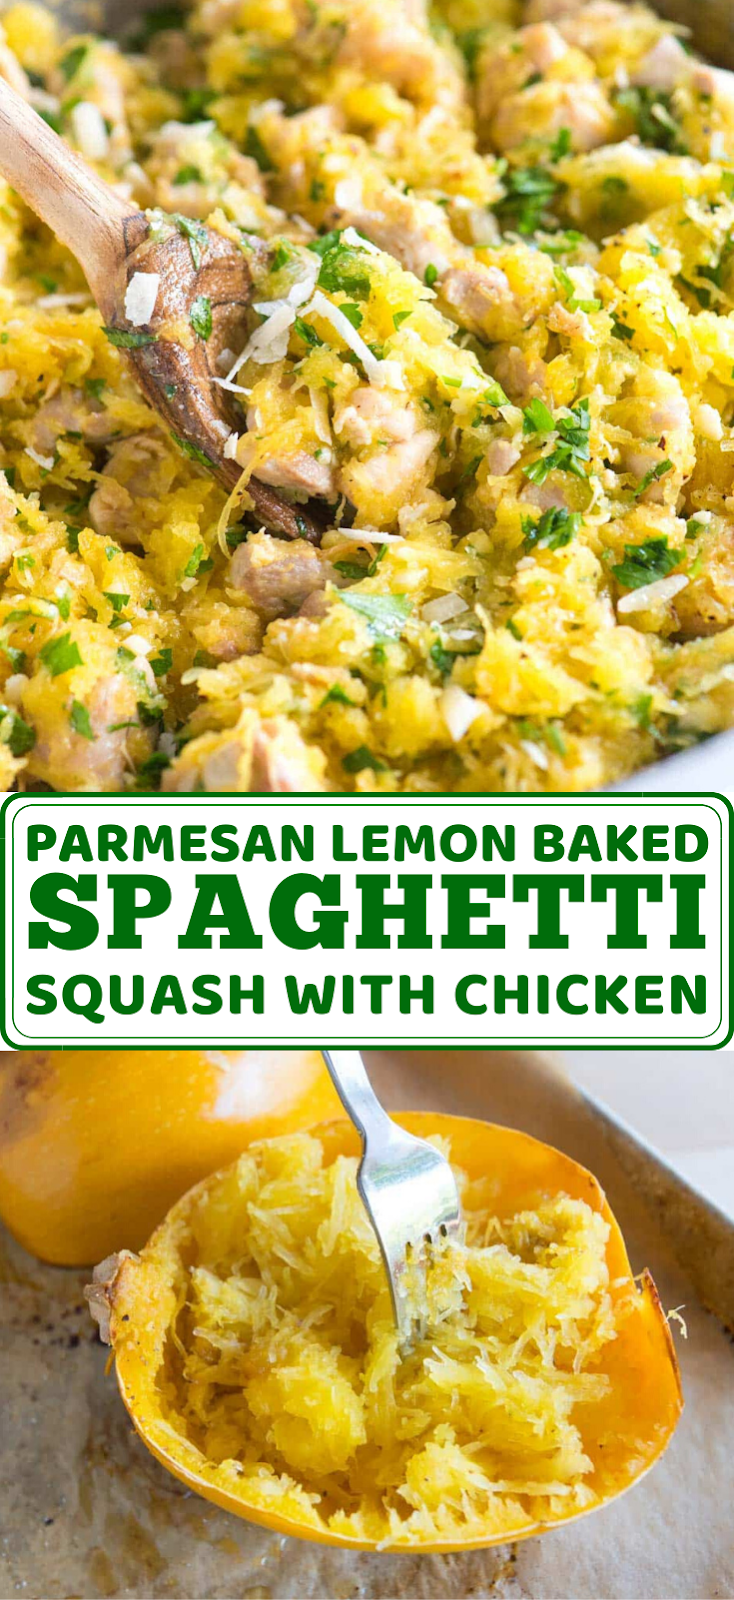 Parmesan Lemon Baked Spaghetti Squash with Chicken